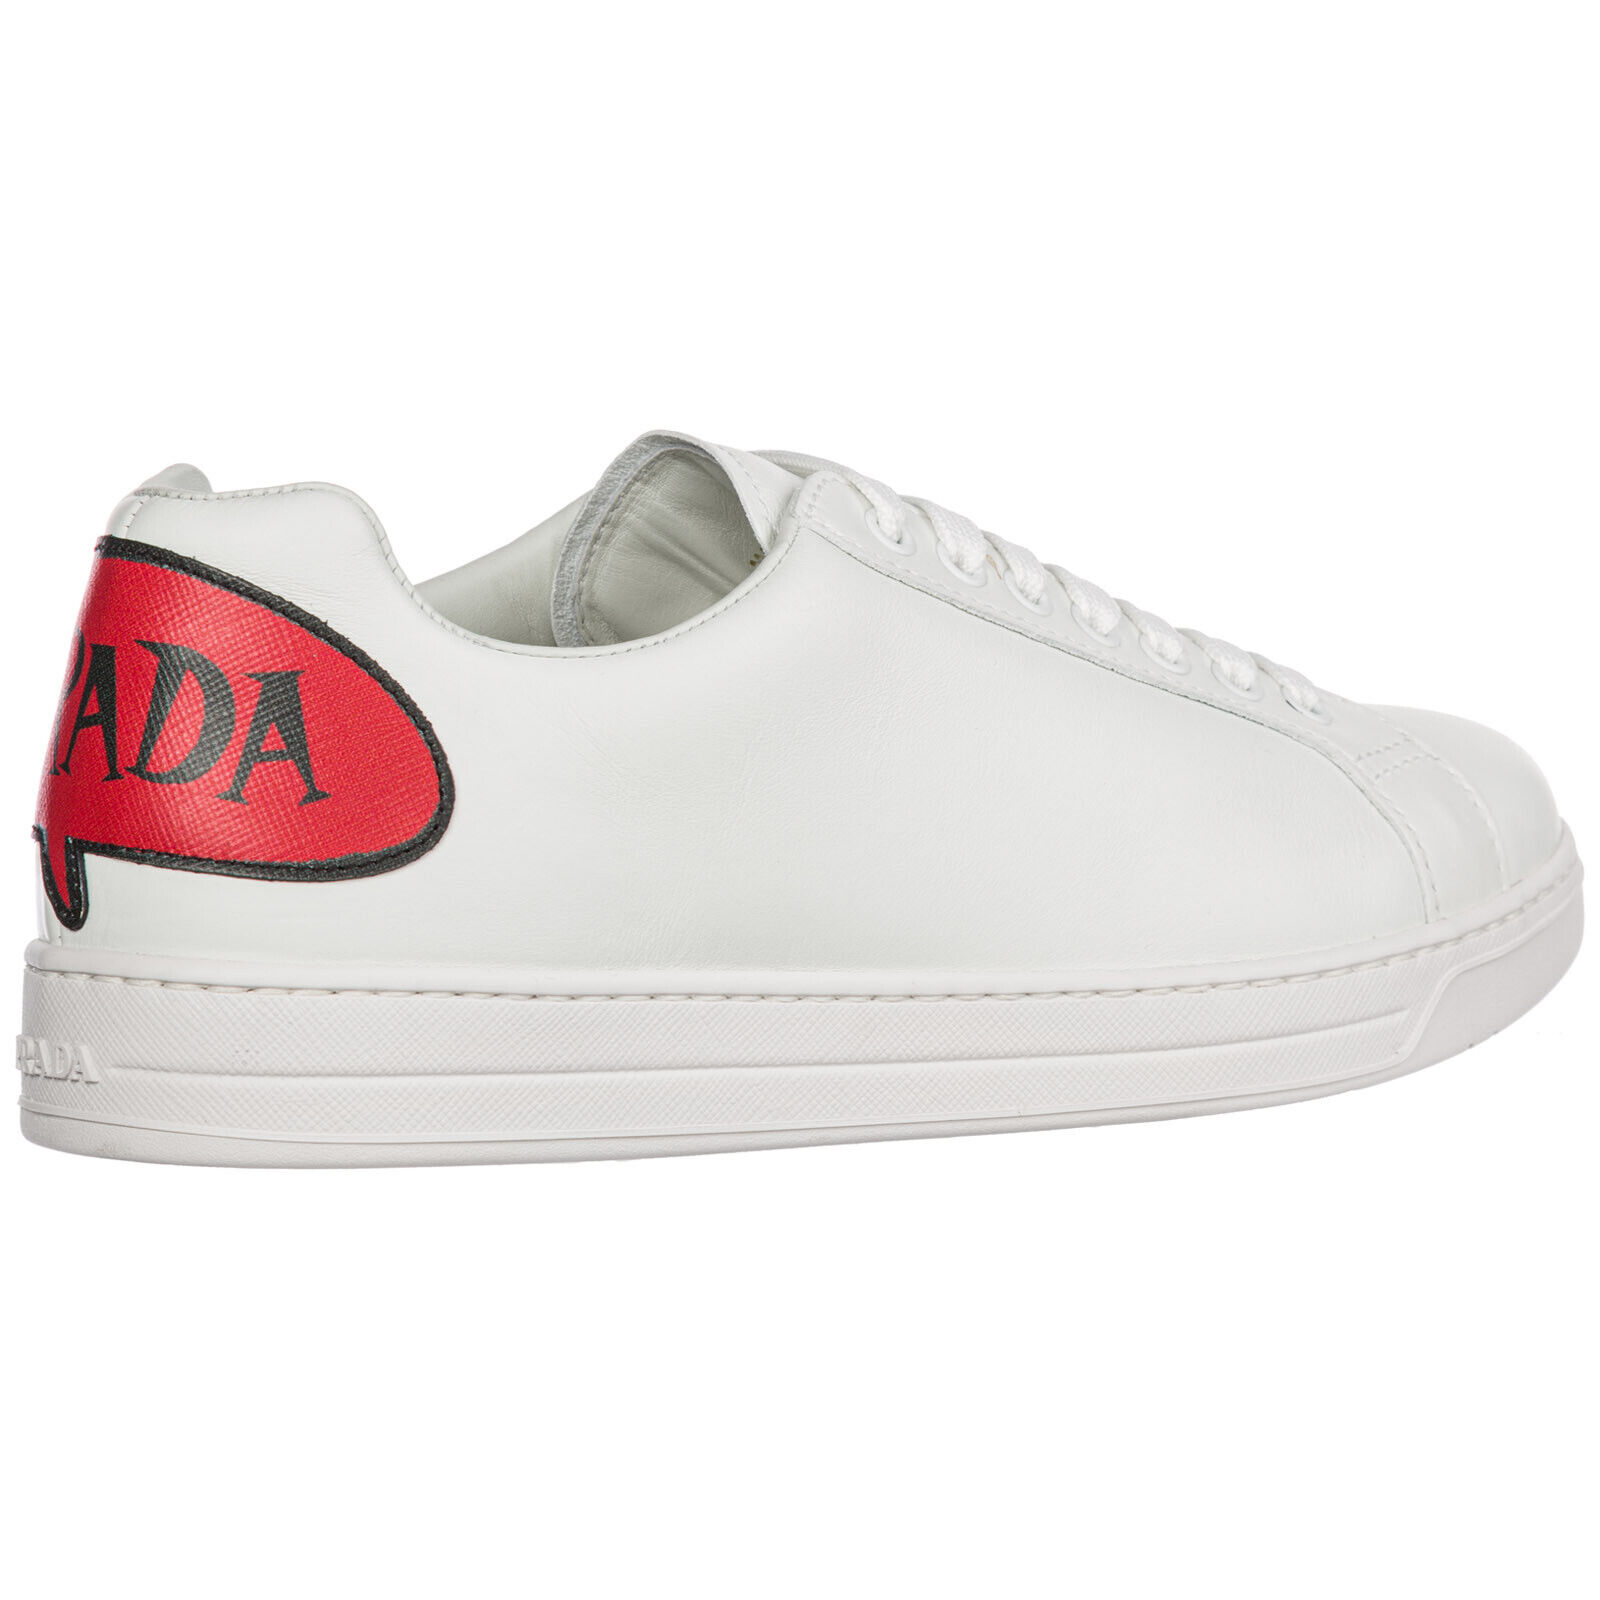 Prada sneakers men Bianco + Fuoco logo shoes trainers eBay